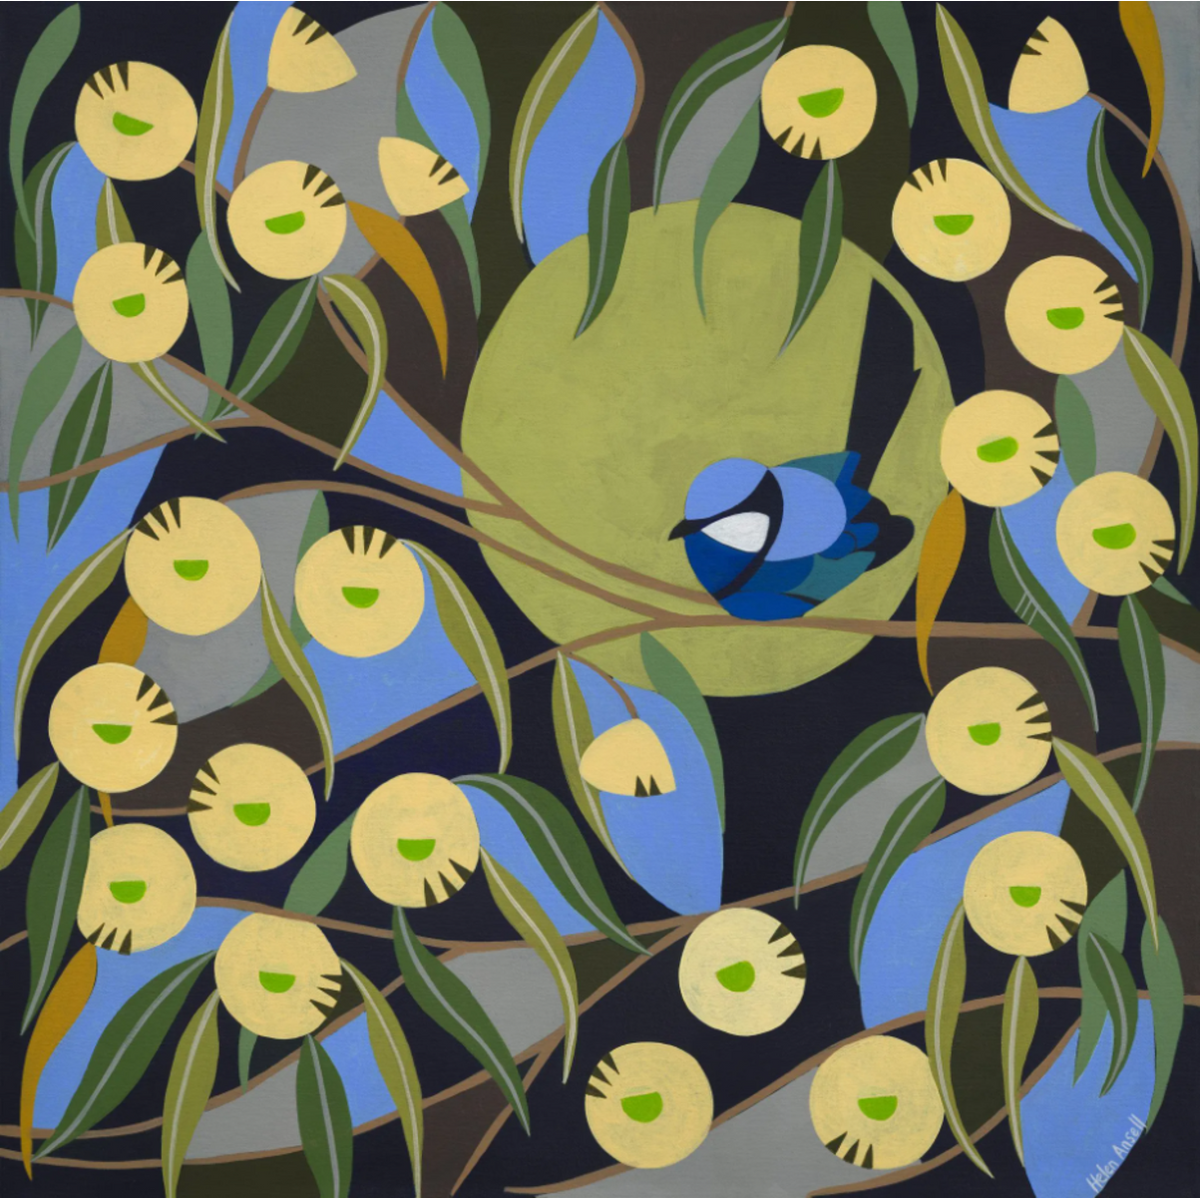 Blue Wren among the Marri Blooms